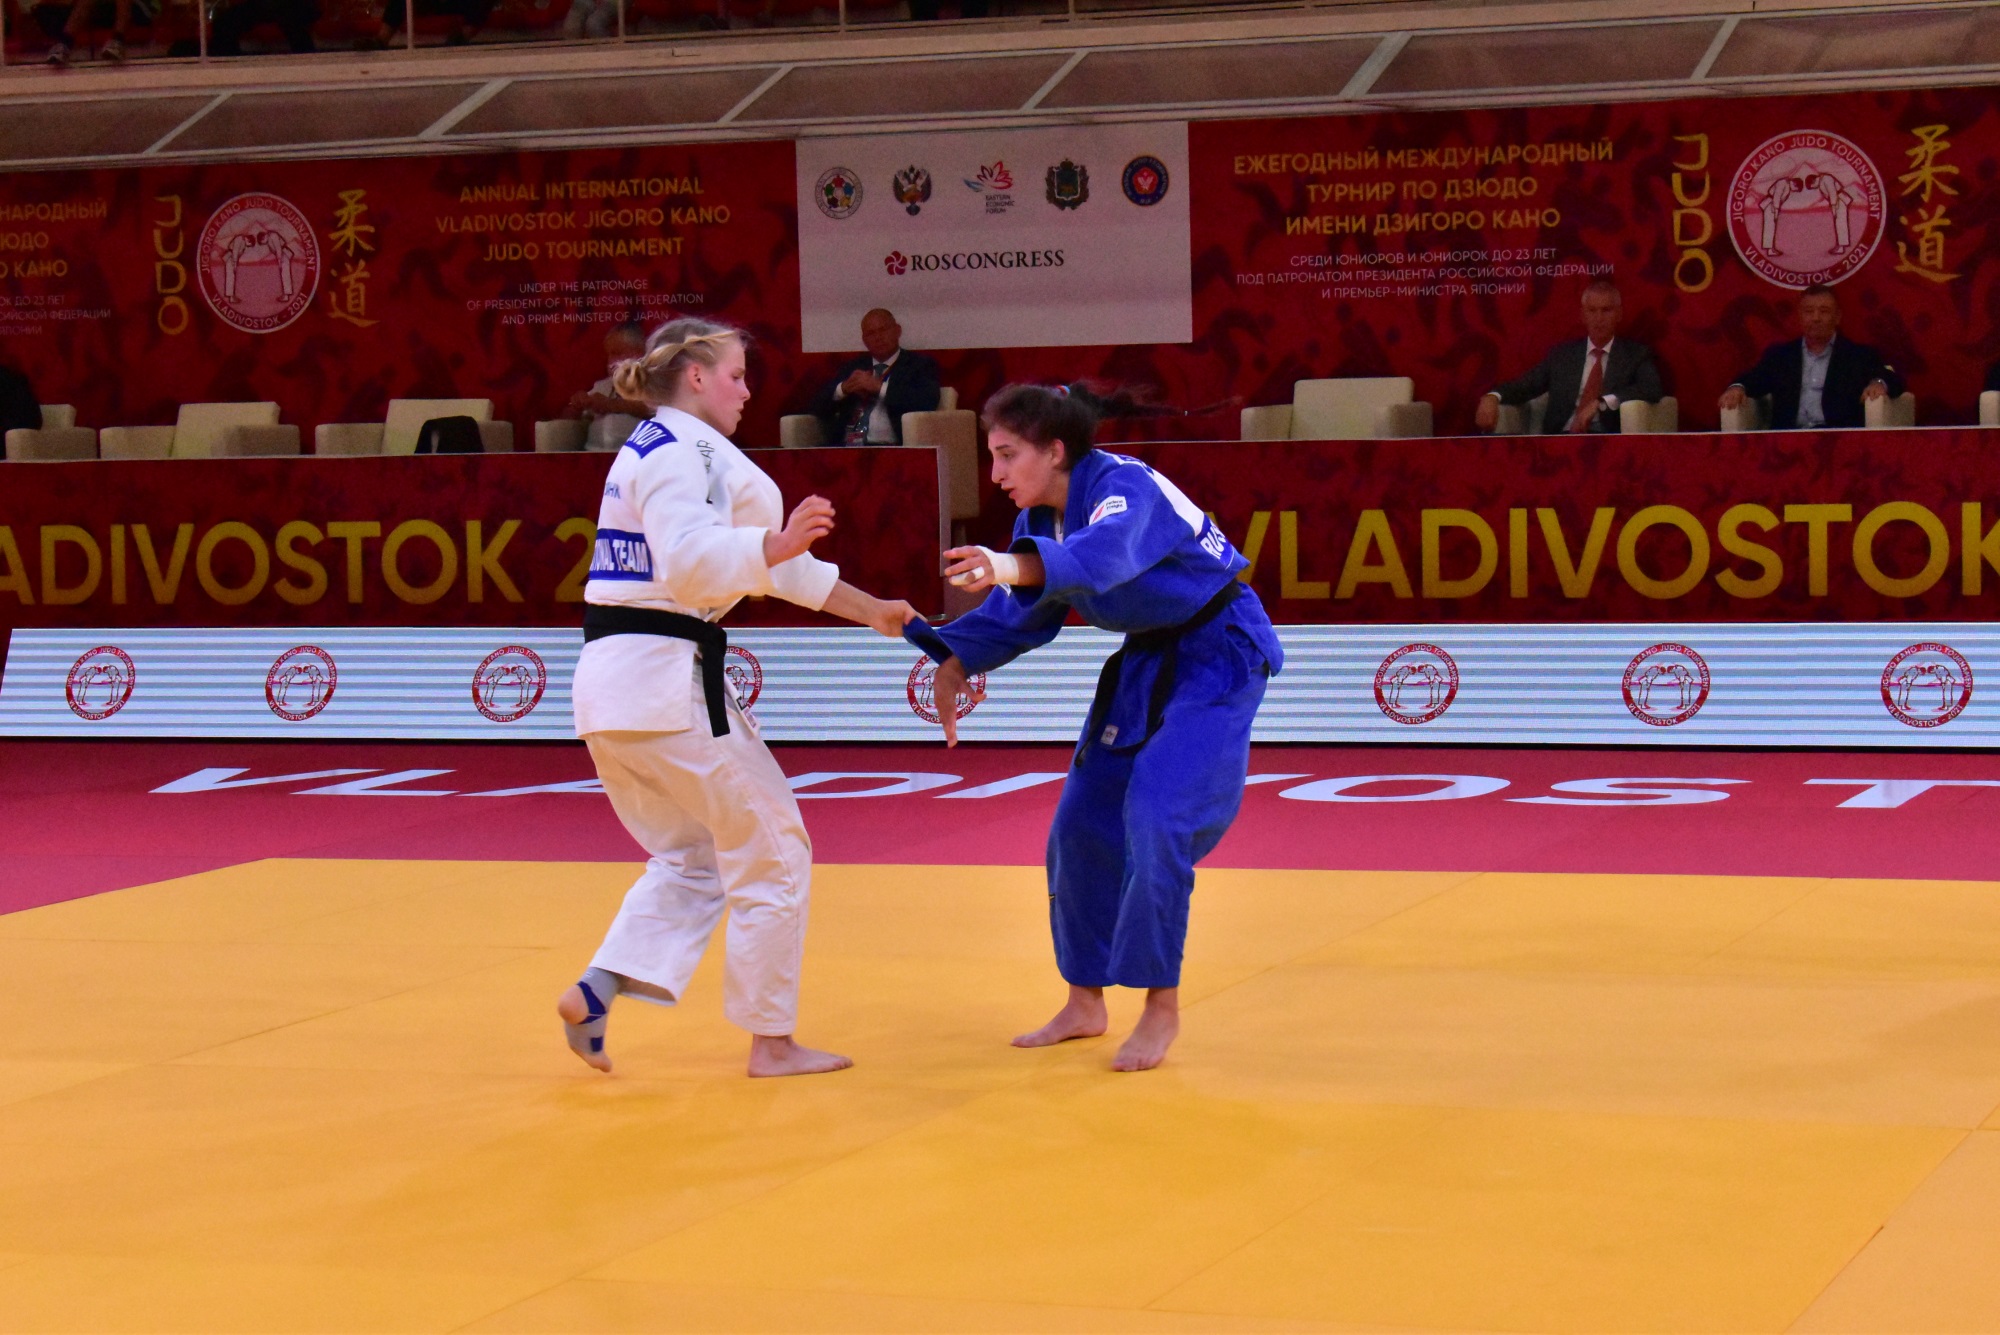 Дзюдо дзигиро кано judo kano Olympics Tokyo 2020 paris 2024